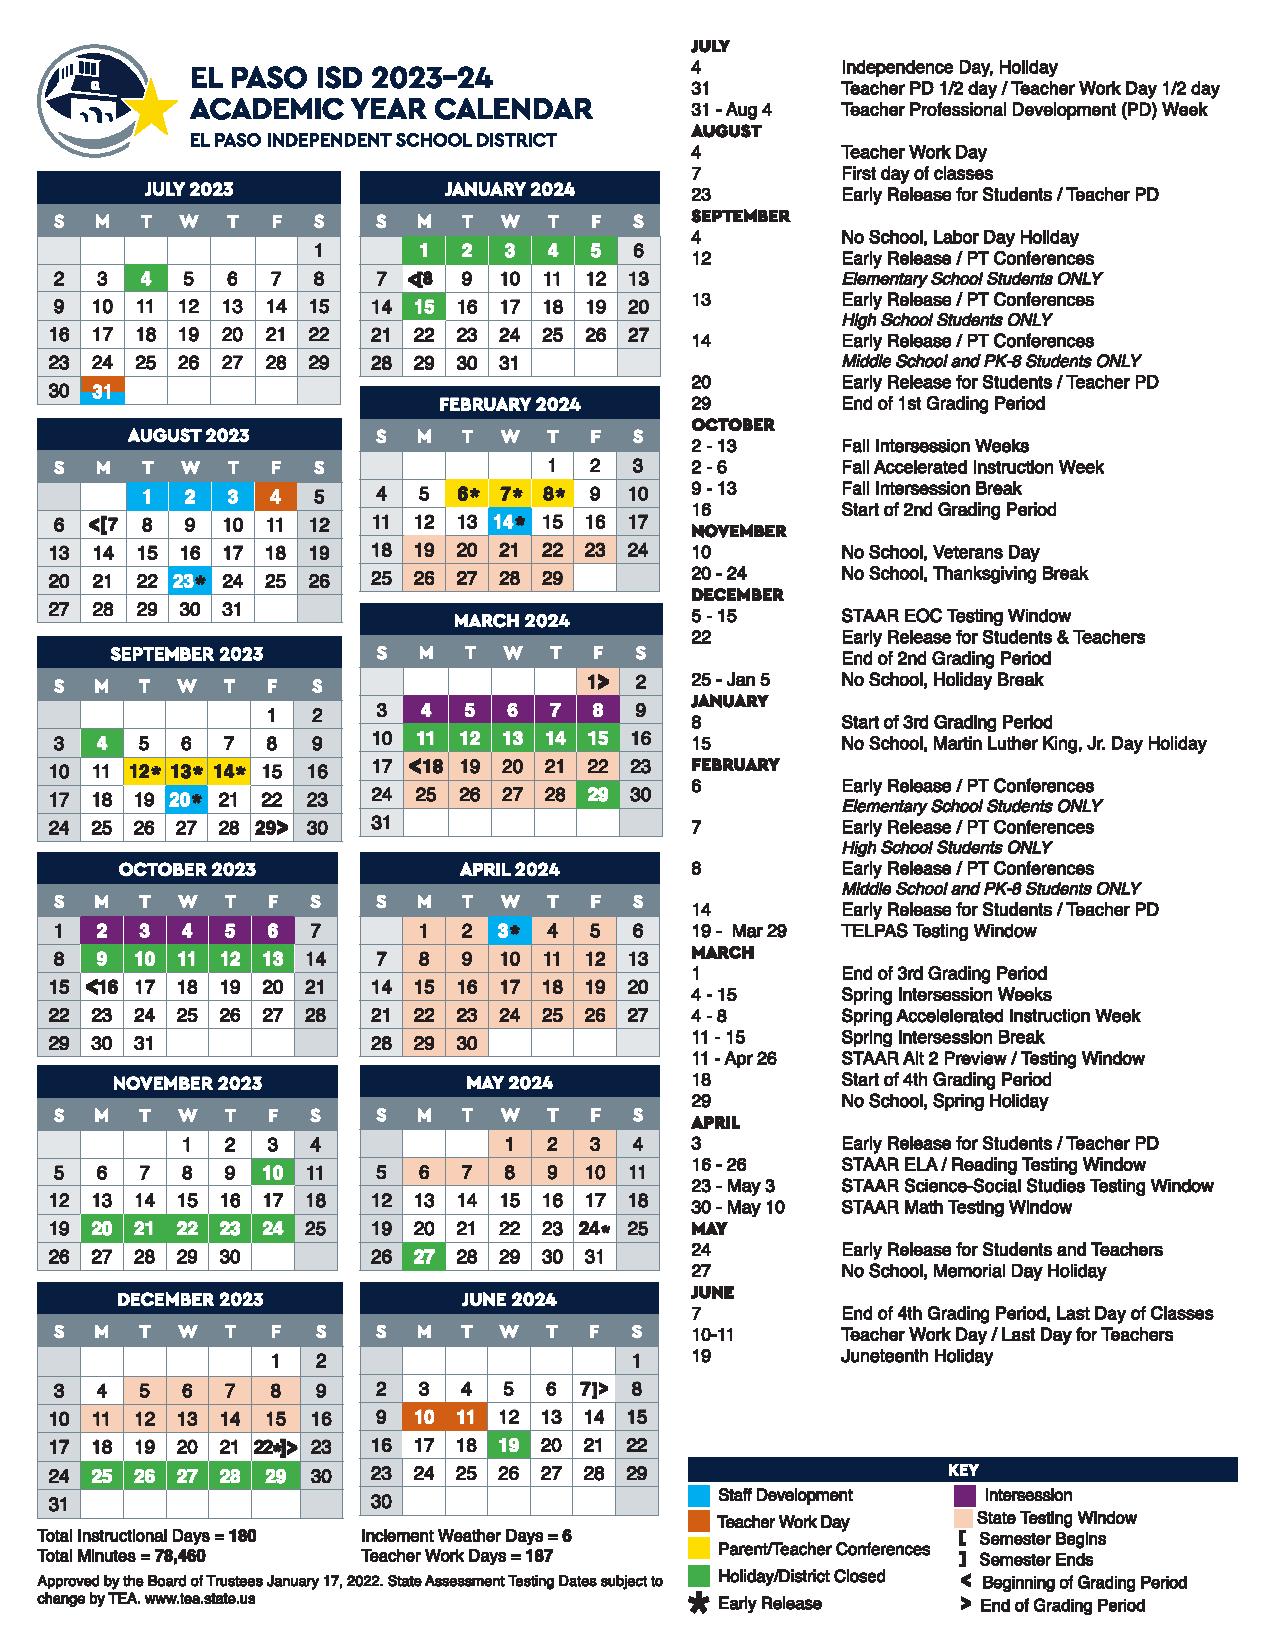 El Paso Independent School District Calendar 2023 2024